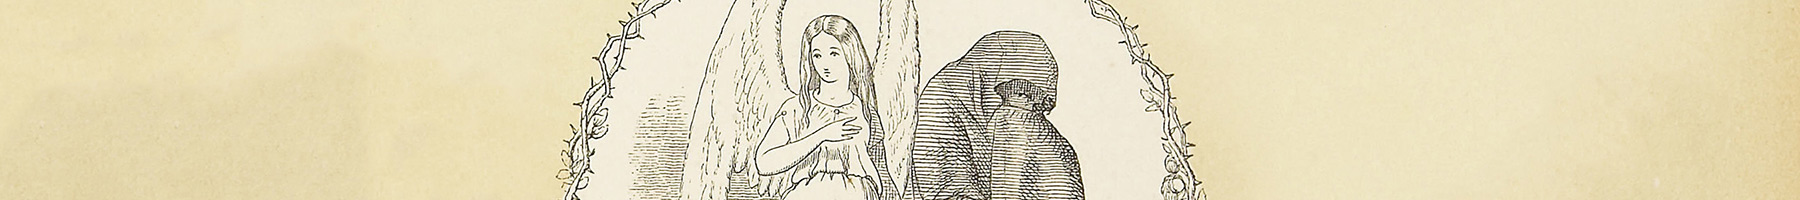 illustration of an angel